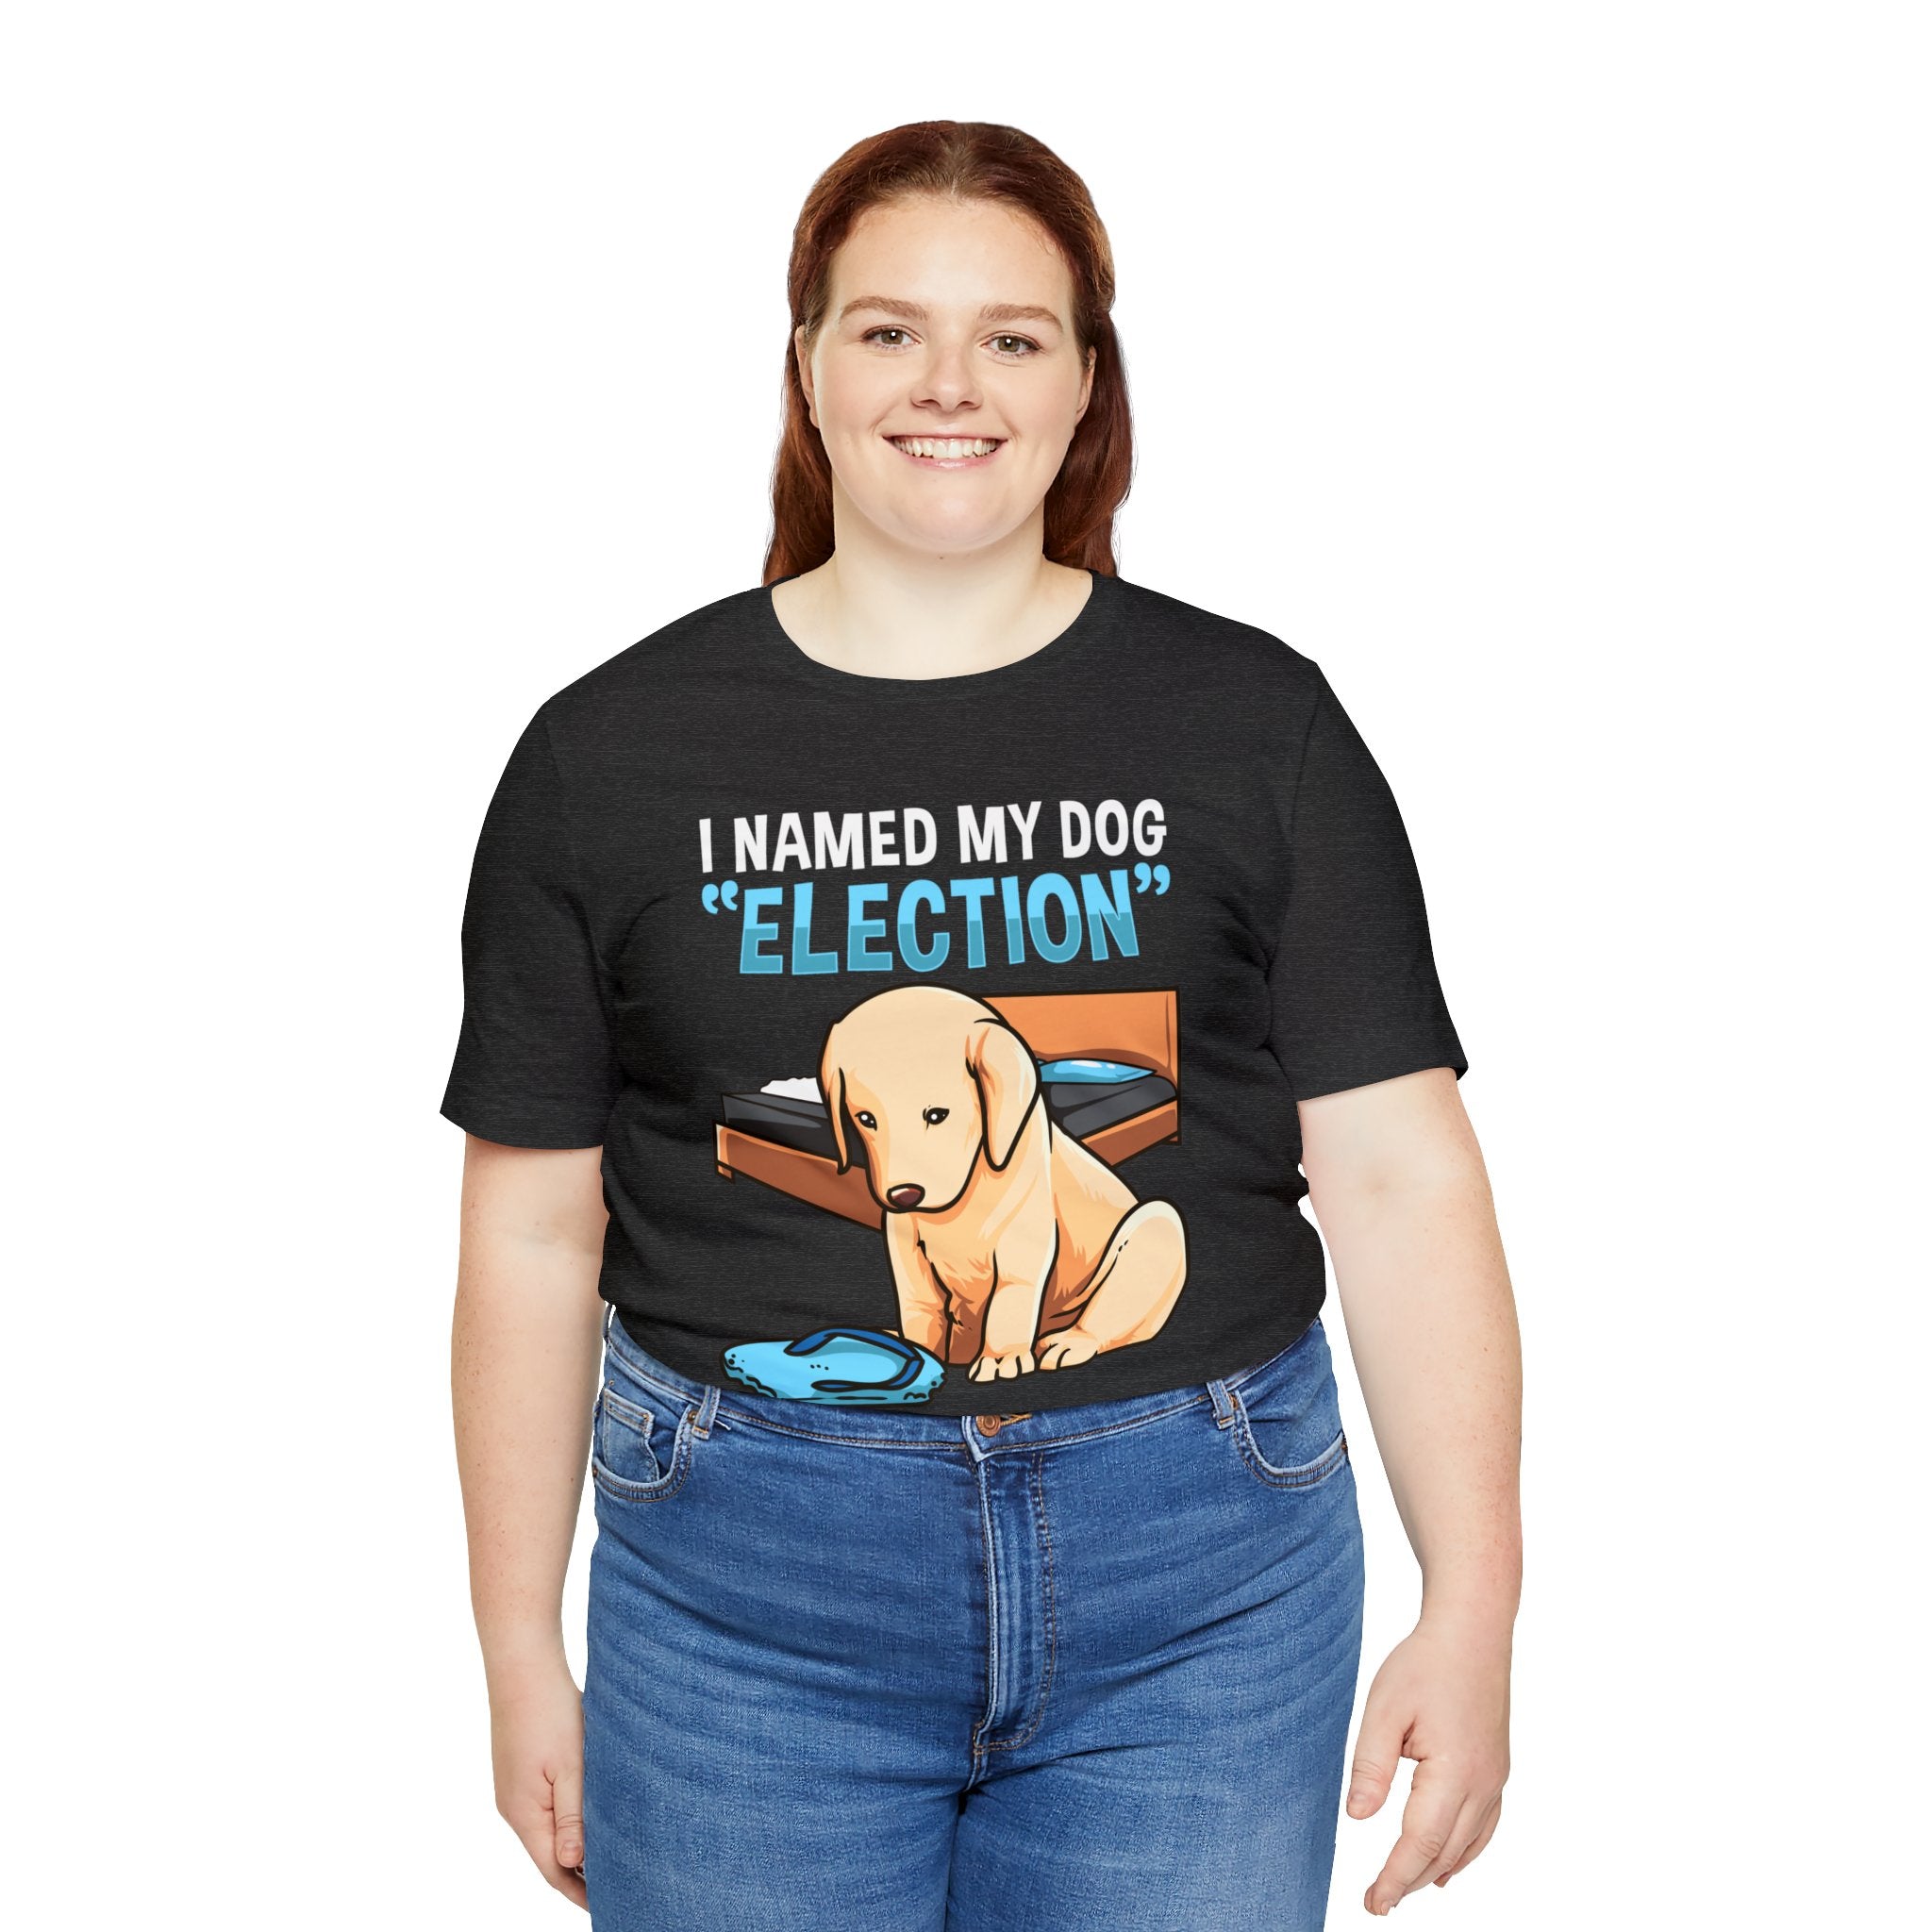 Bad Dog - Election Tee